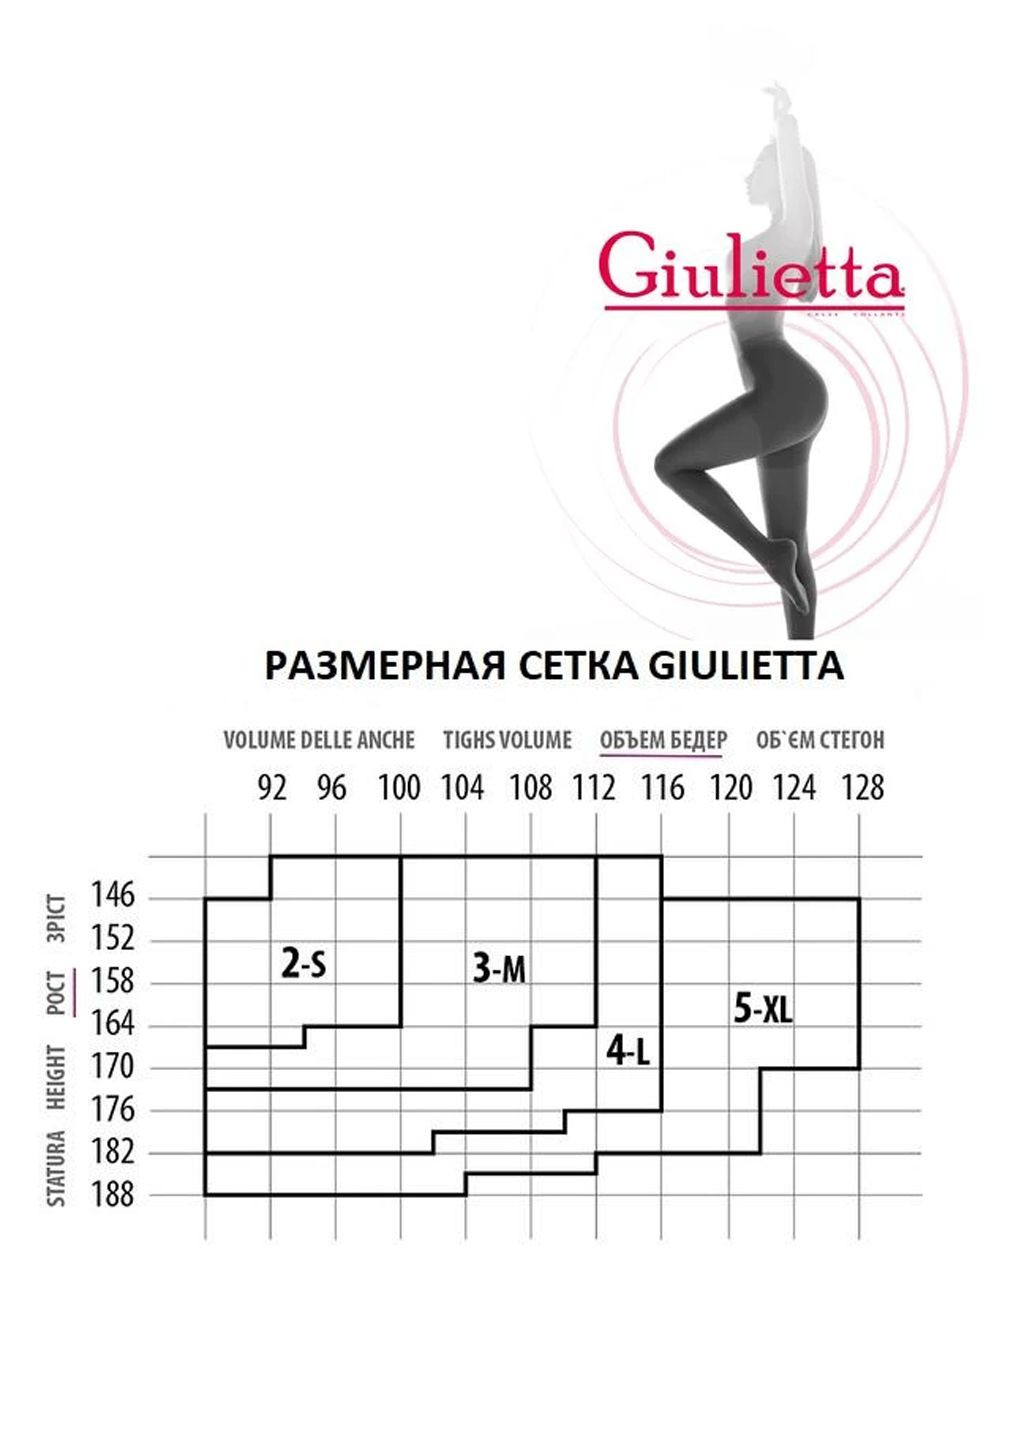 Жіночі колготки CLASS NEW 20 Den (daino-3) Giulietta (281375962)